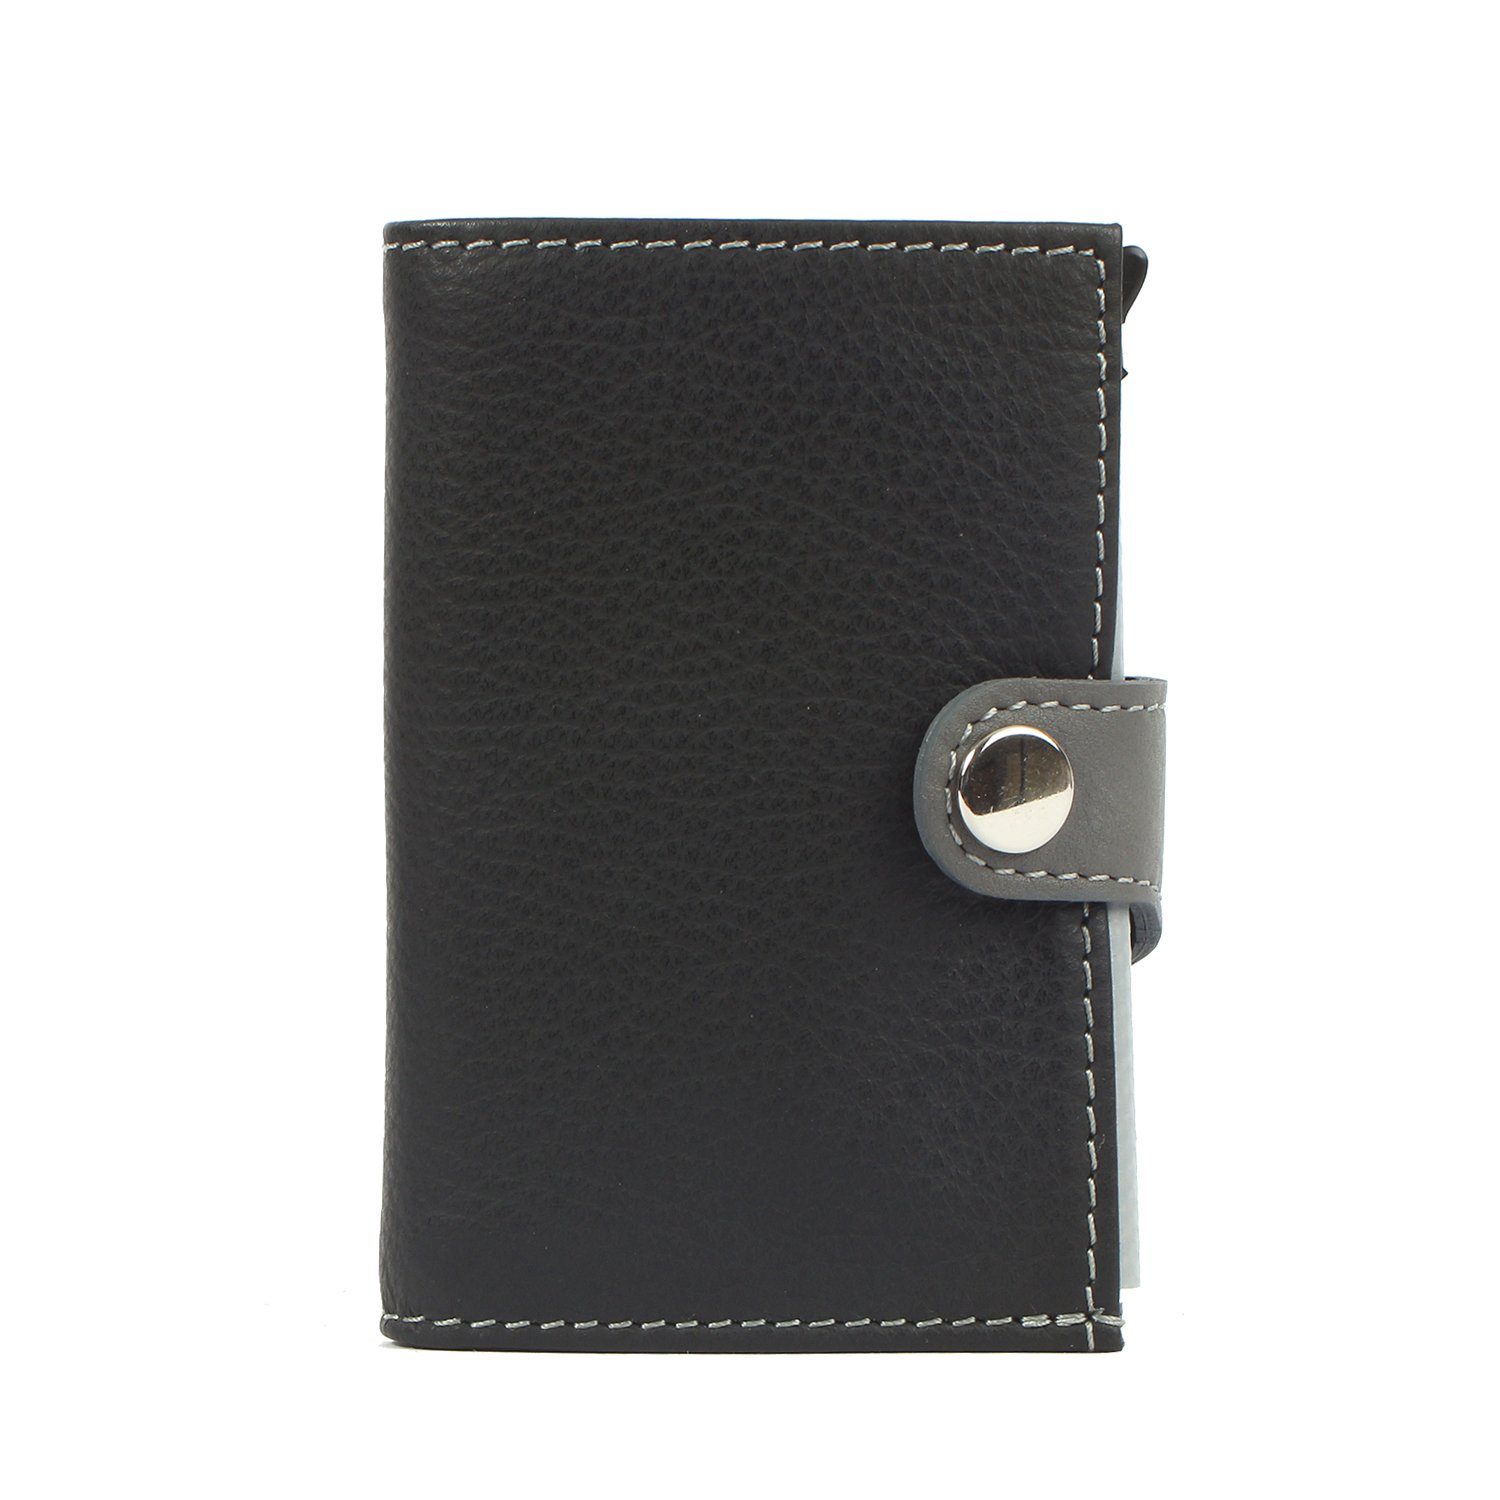 Margelisch Mini black Geldbörse single leather, aus Kreditkartenbörse Leder noonyu Upcycling